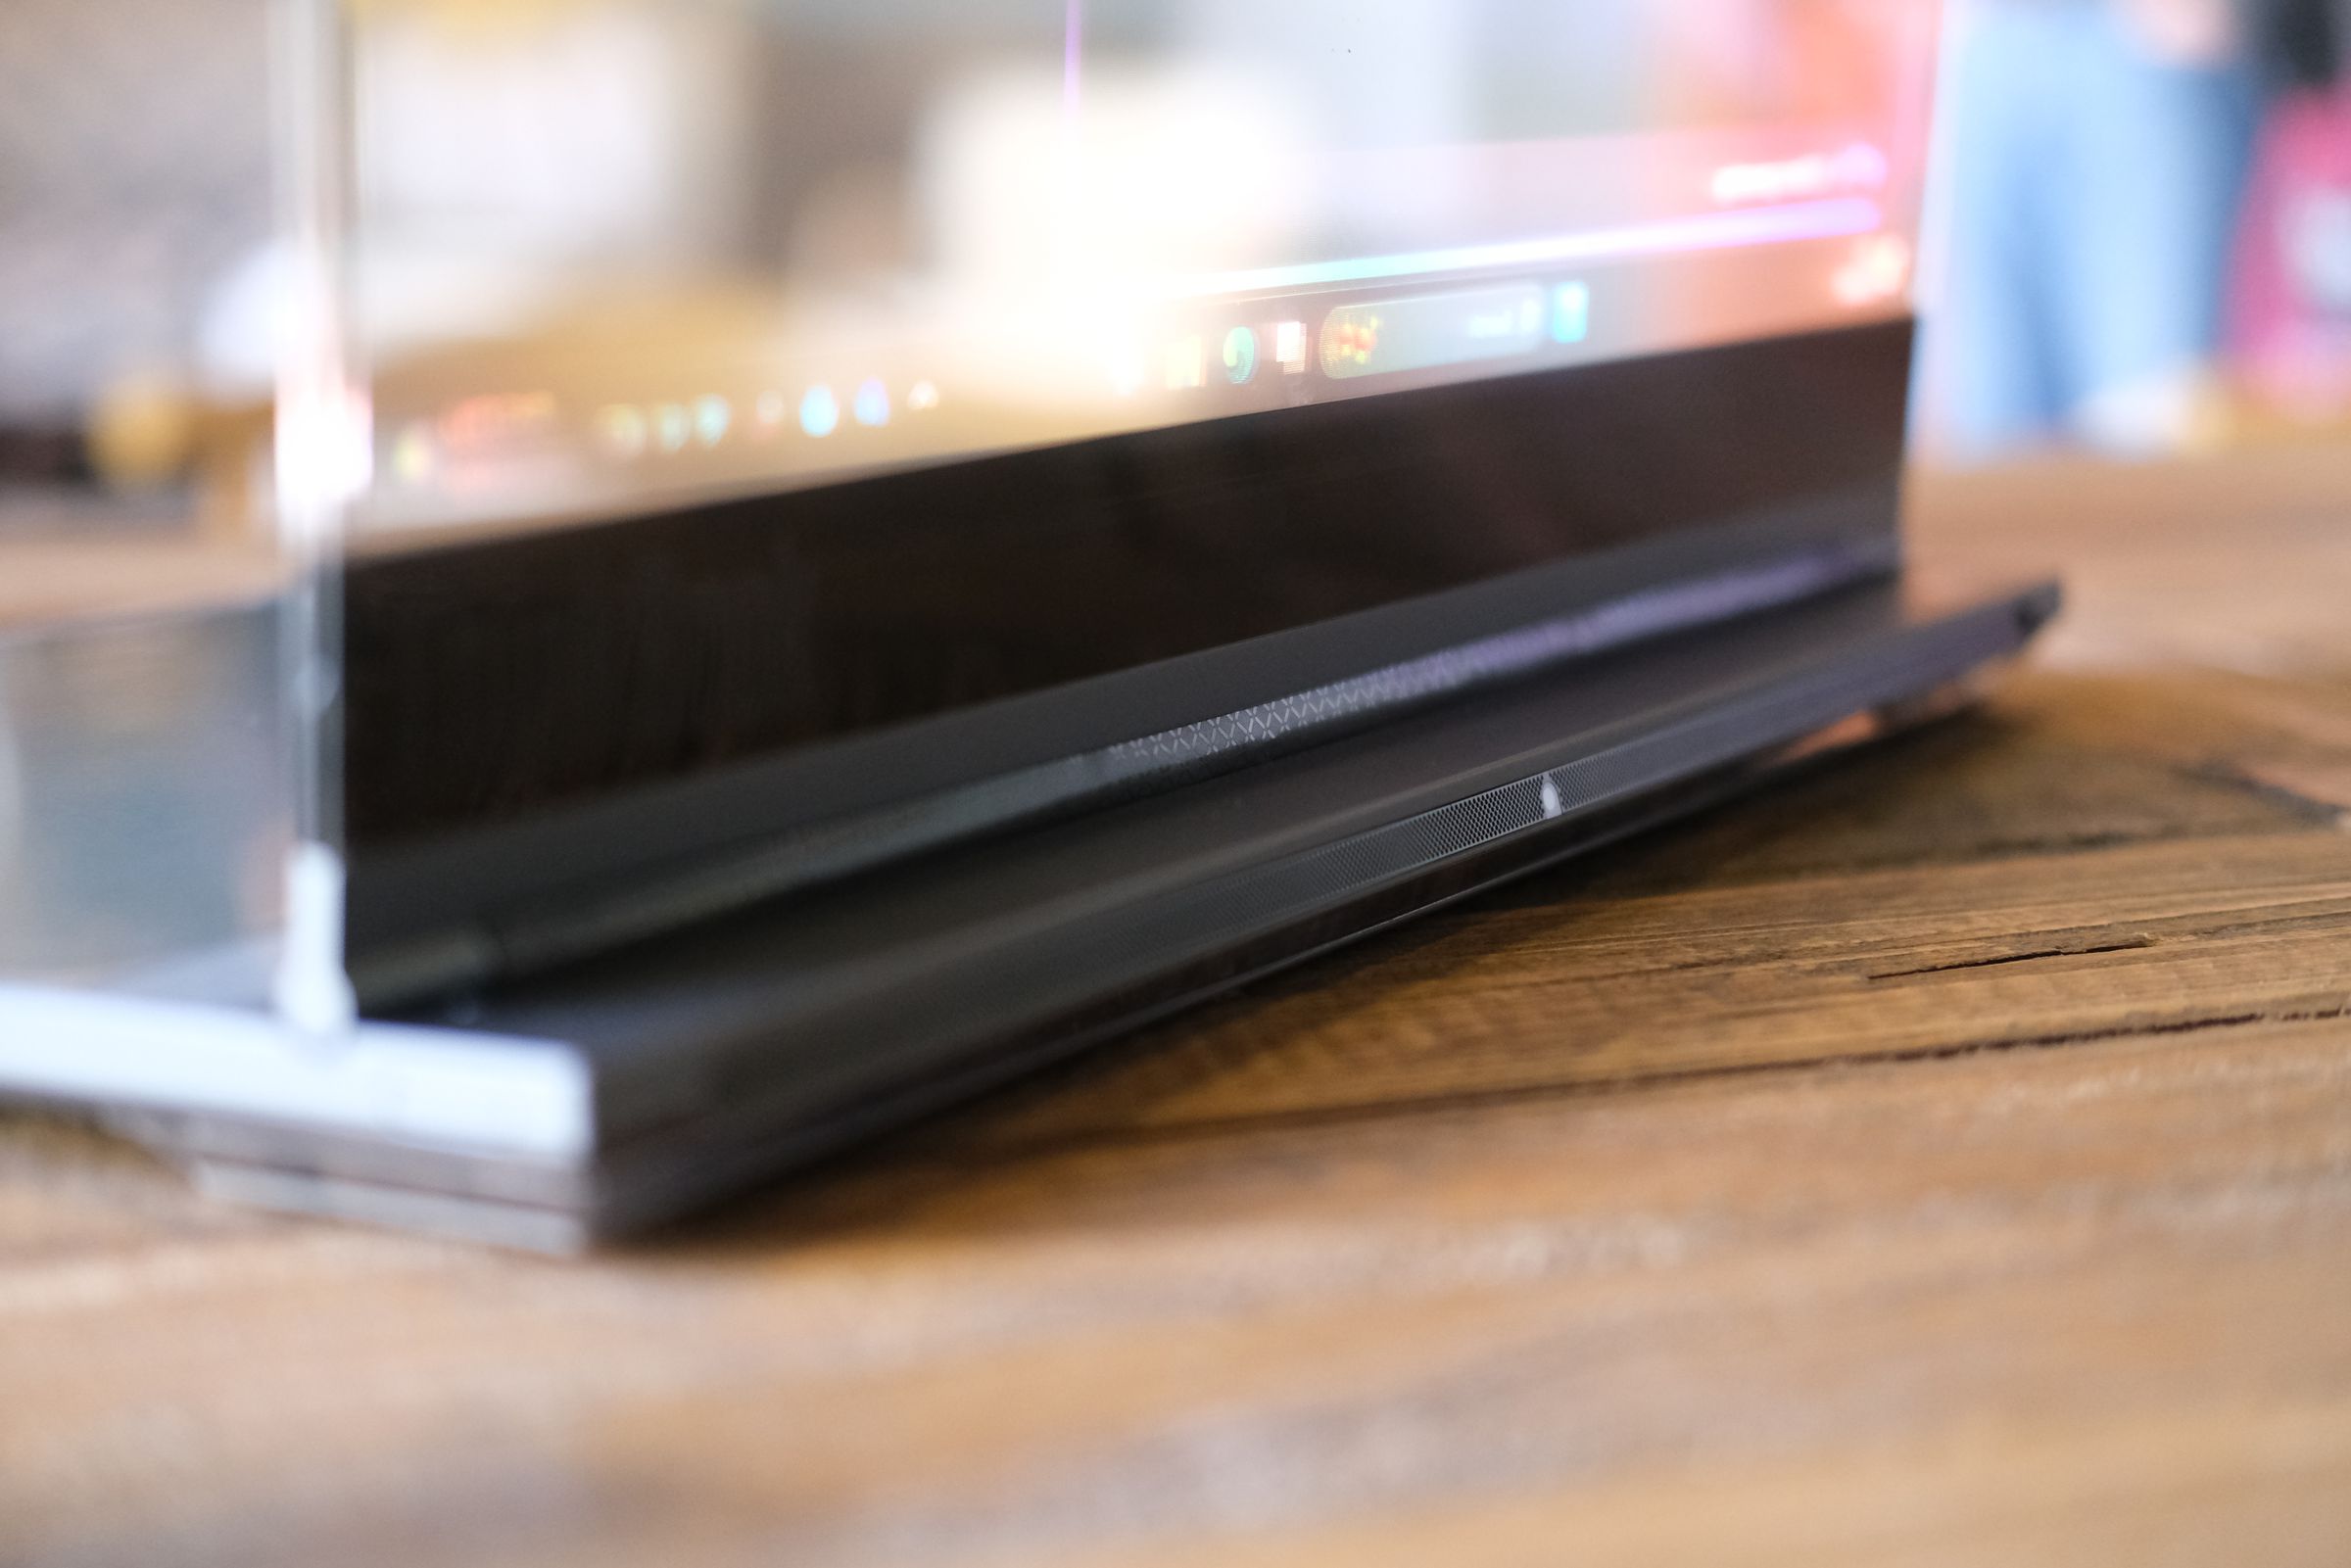 Close up of back base of Lenovo laptop showing small camera.